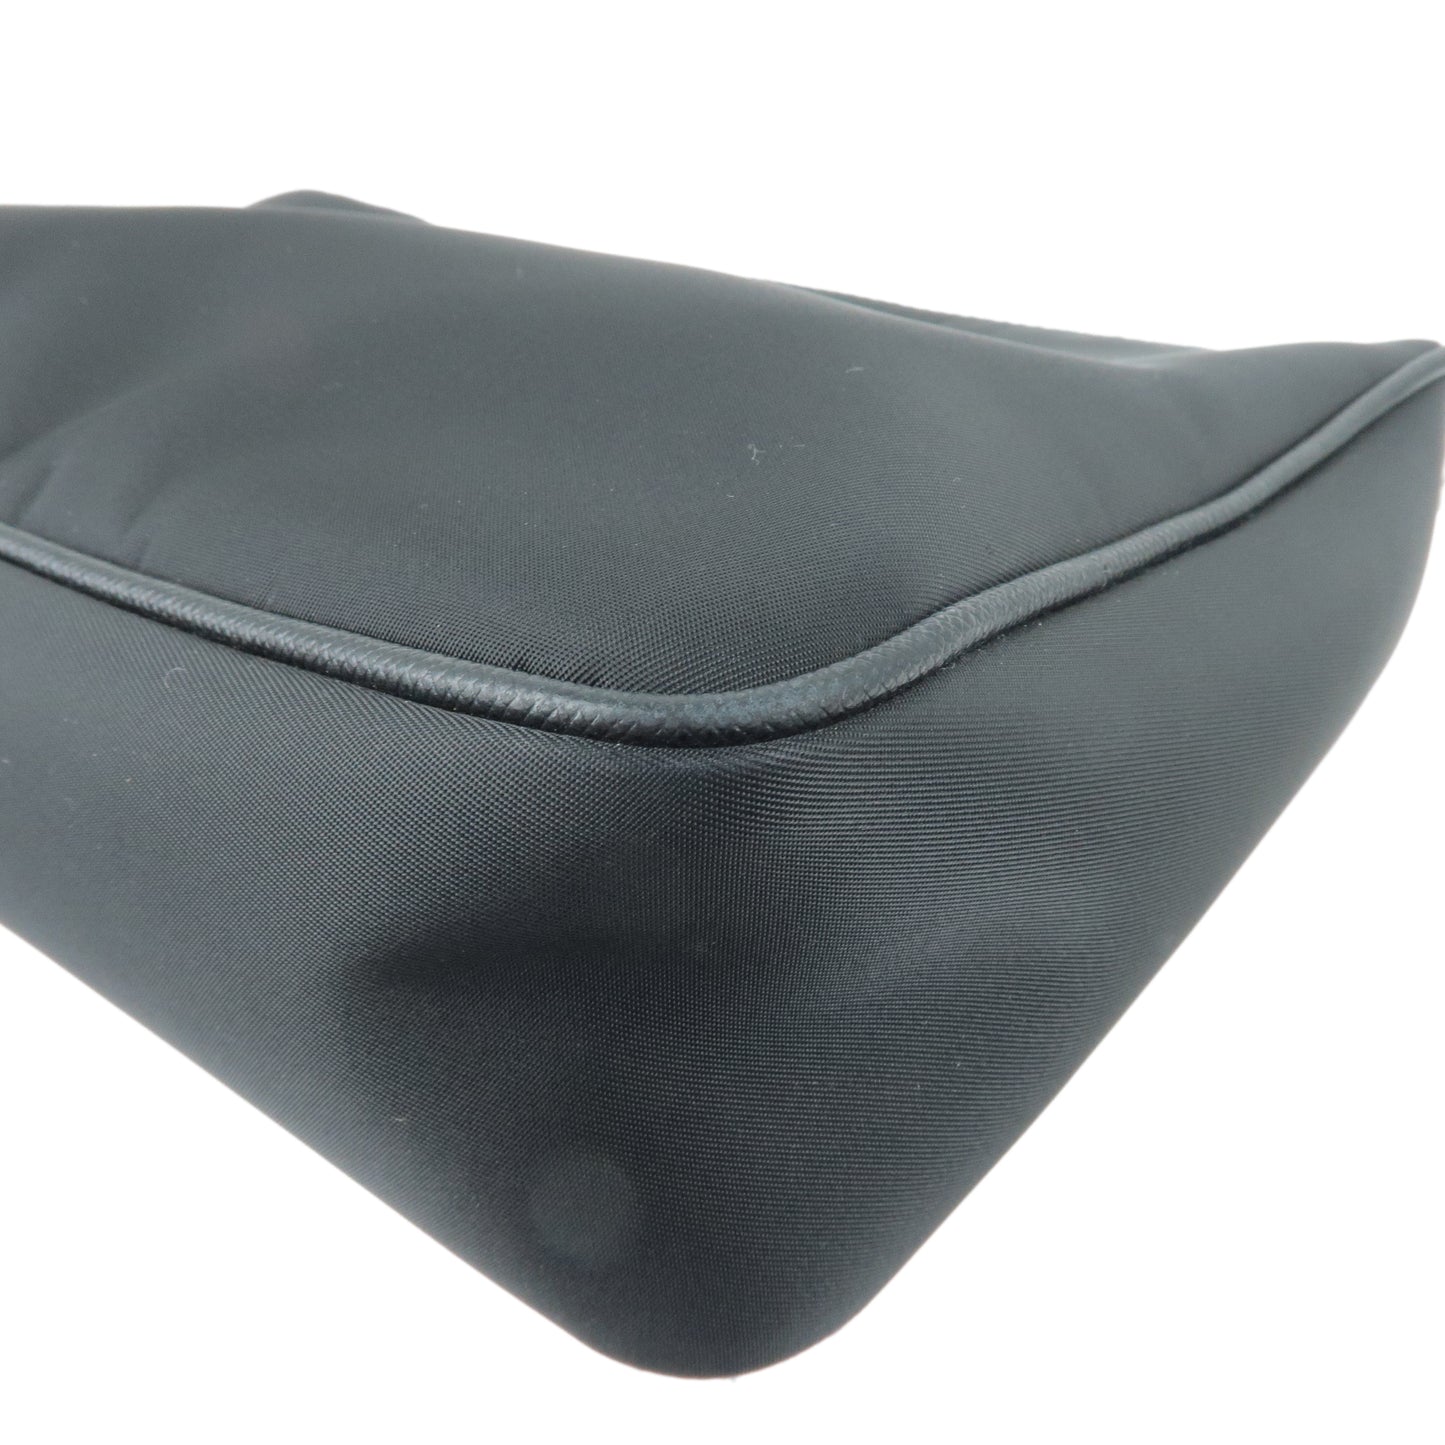 PRADA Logo Nylon Leather Shoulder Bag Black Yellow 2VH113